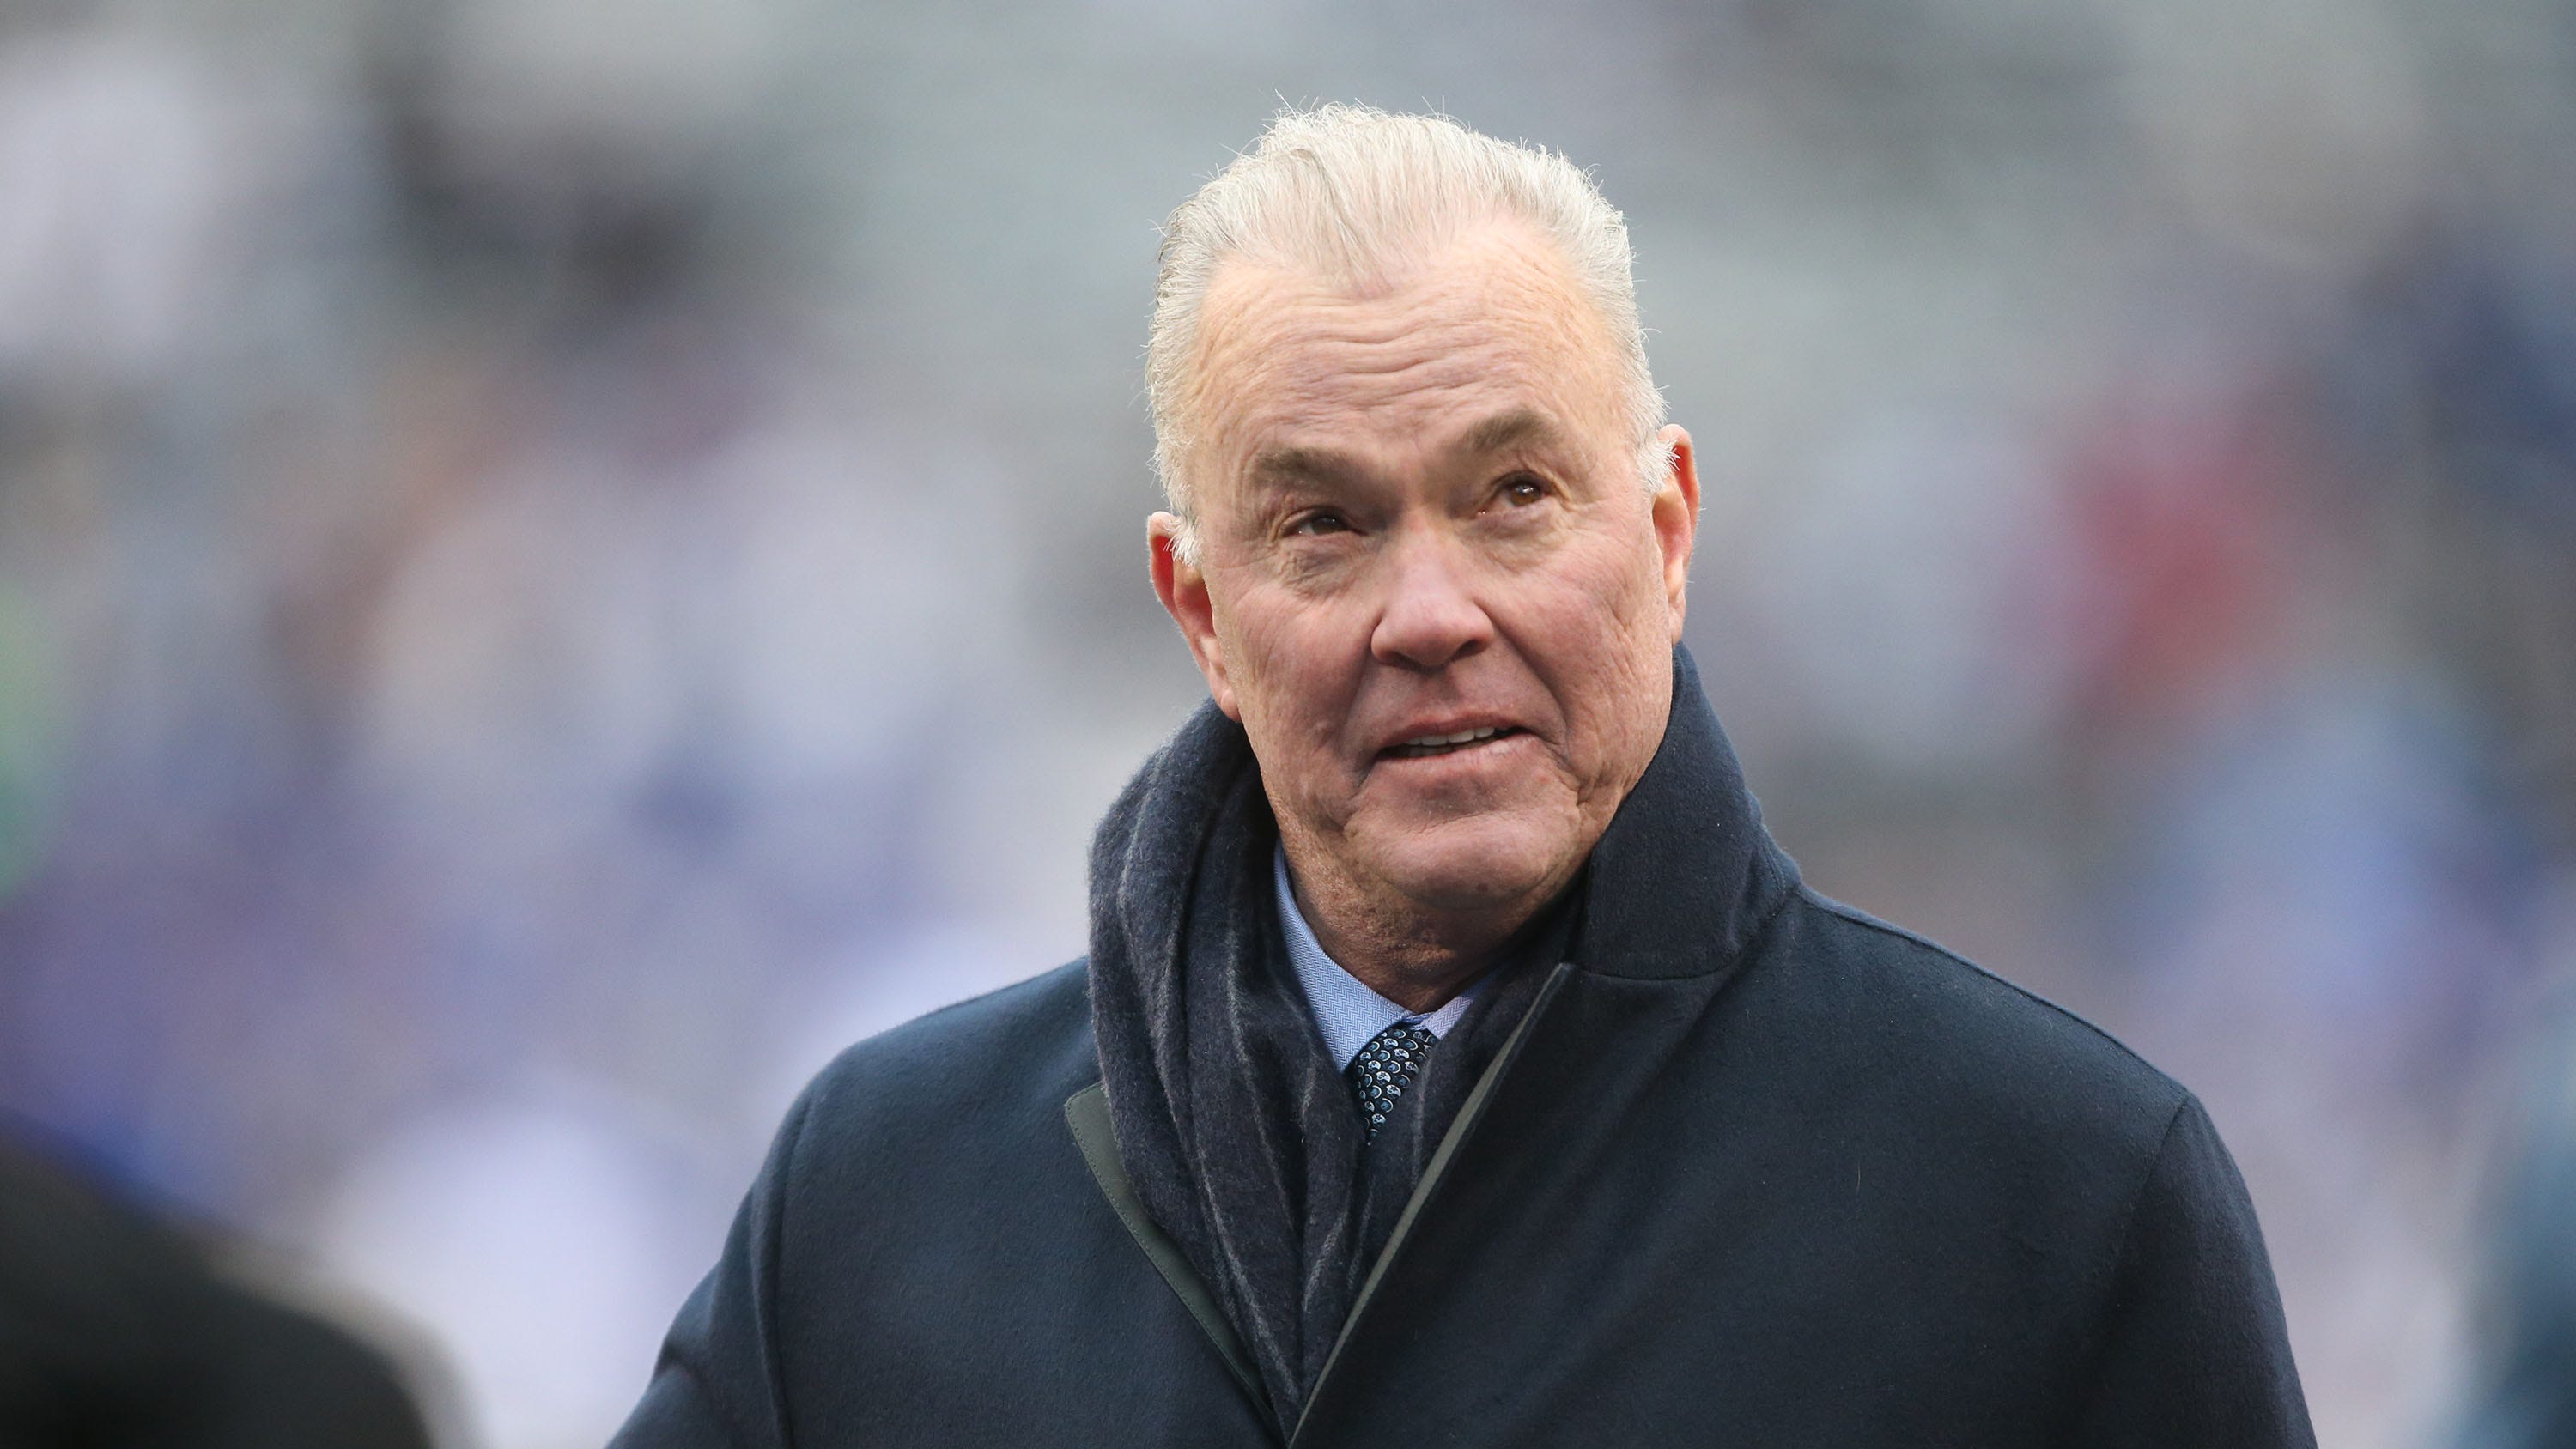 Cowboys 'evaluating all options' following Dak Prescott's injury, team exec Stephen Jones says